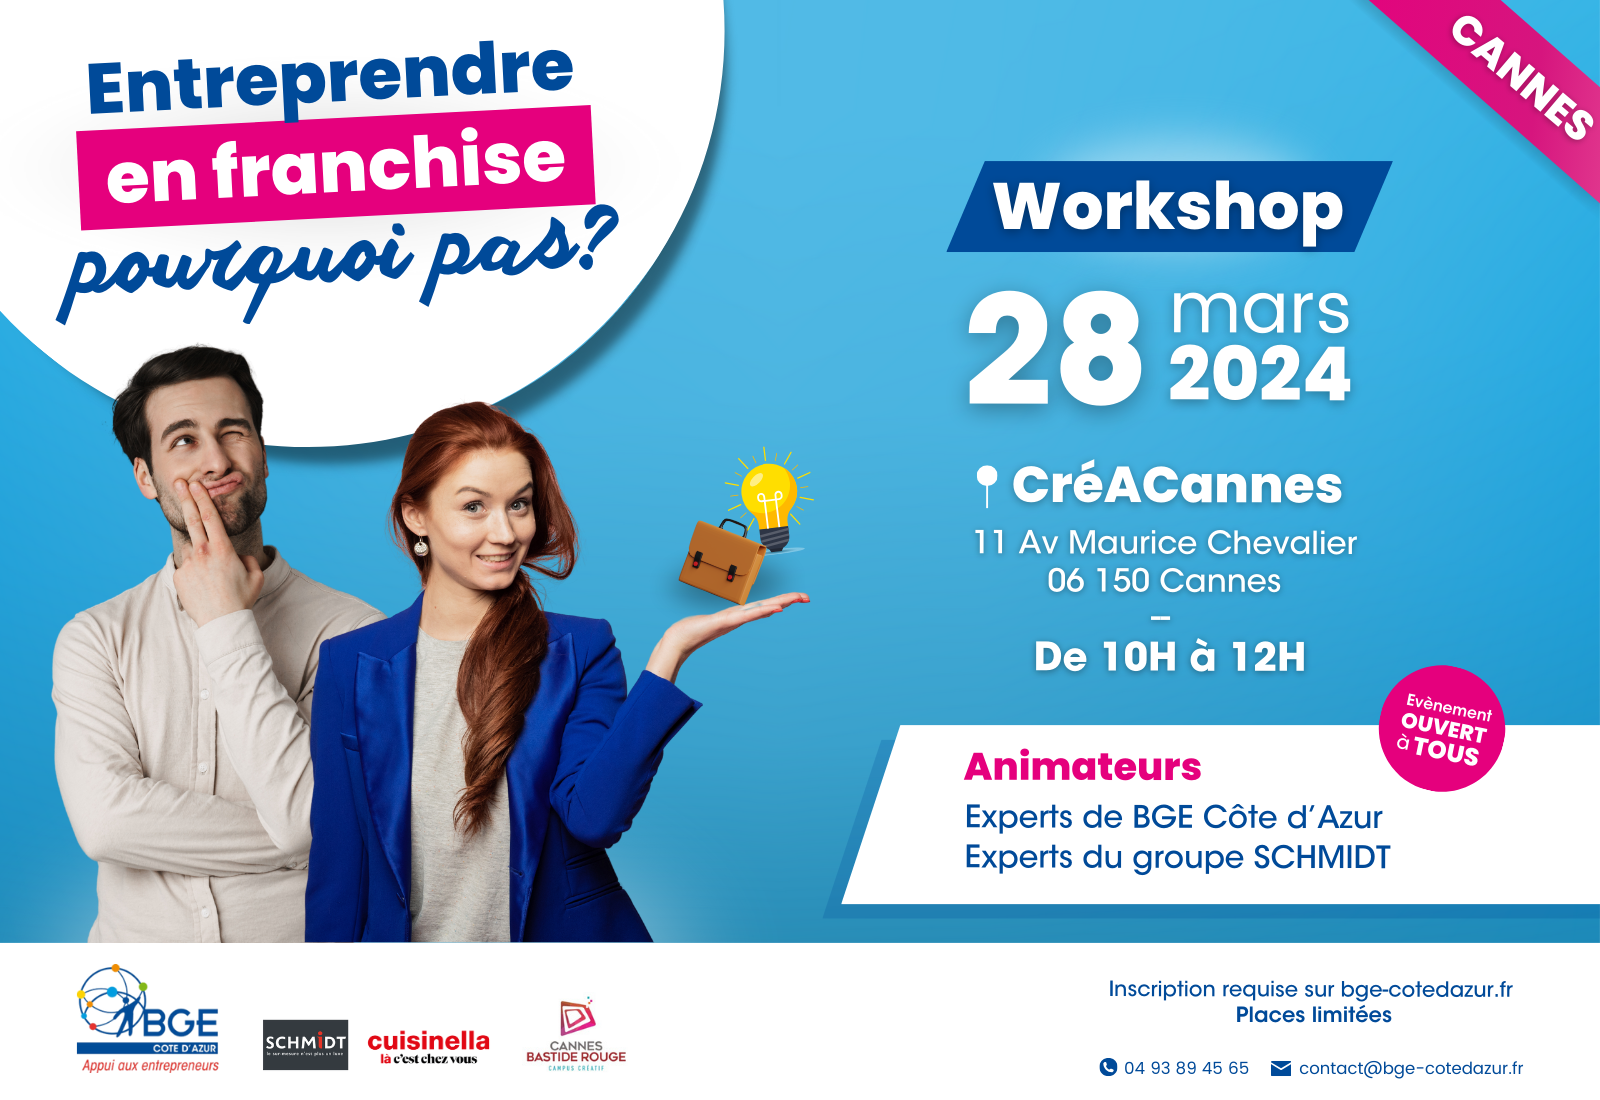 Evénement entrepreneuriat - Workshop à Cannes - Entreprendre en franchise